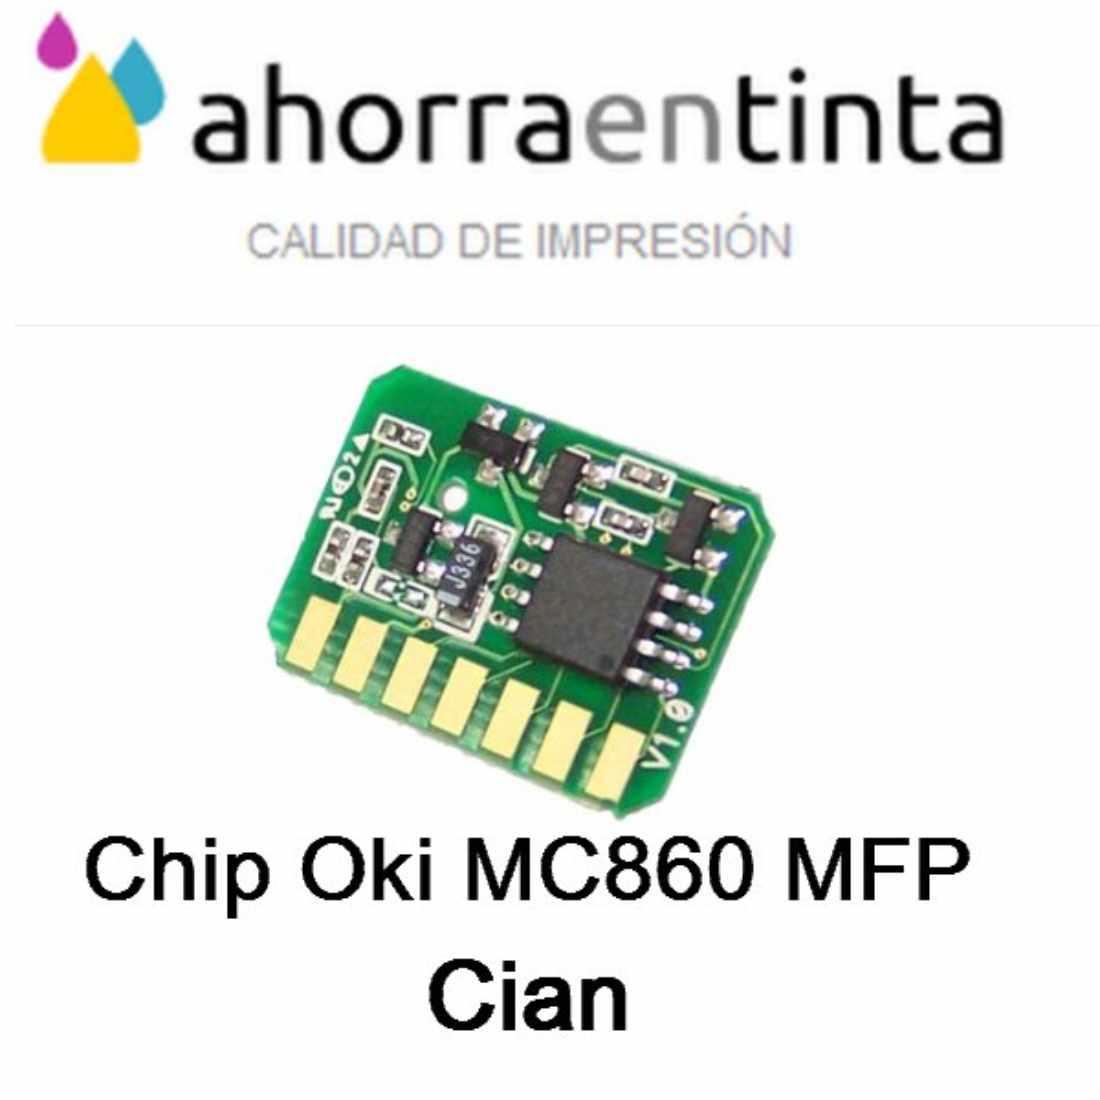 Foto de producto Chip Cian para Oki MC860 MFP